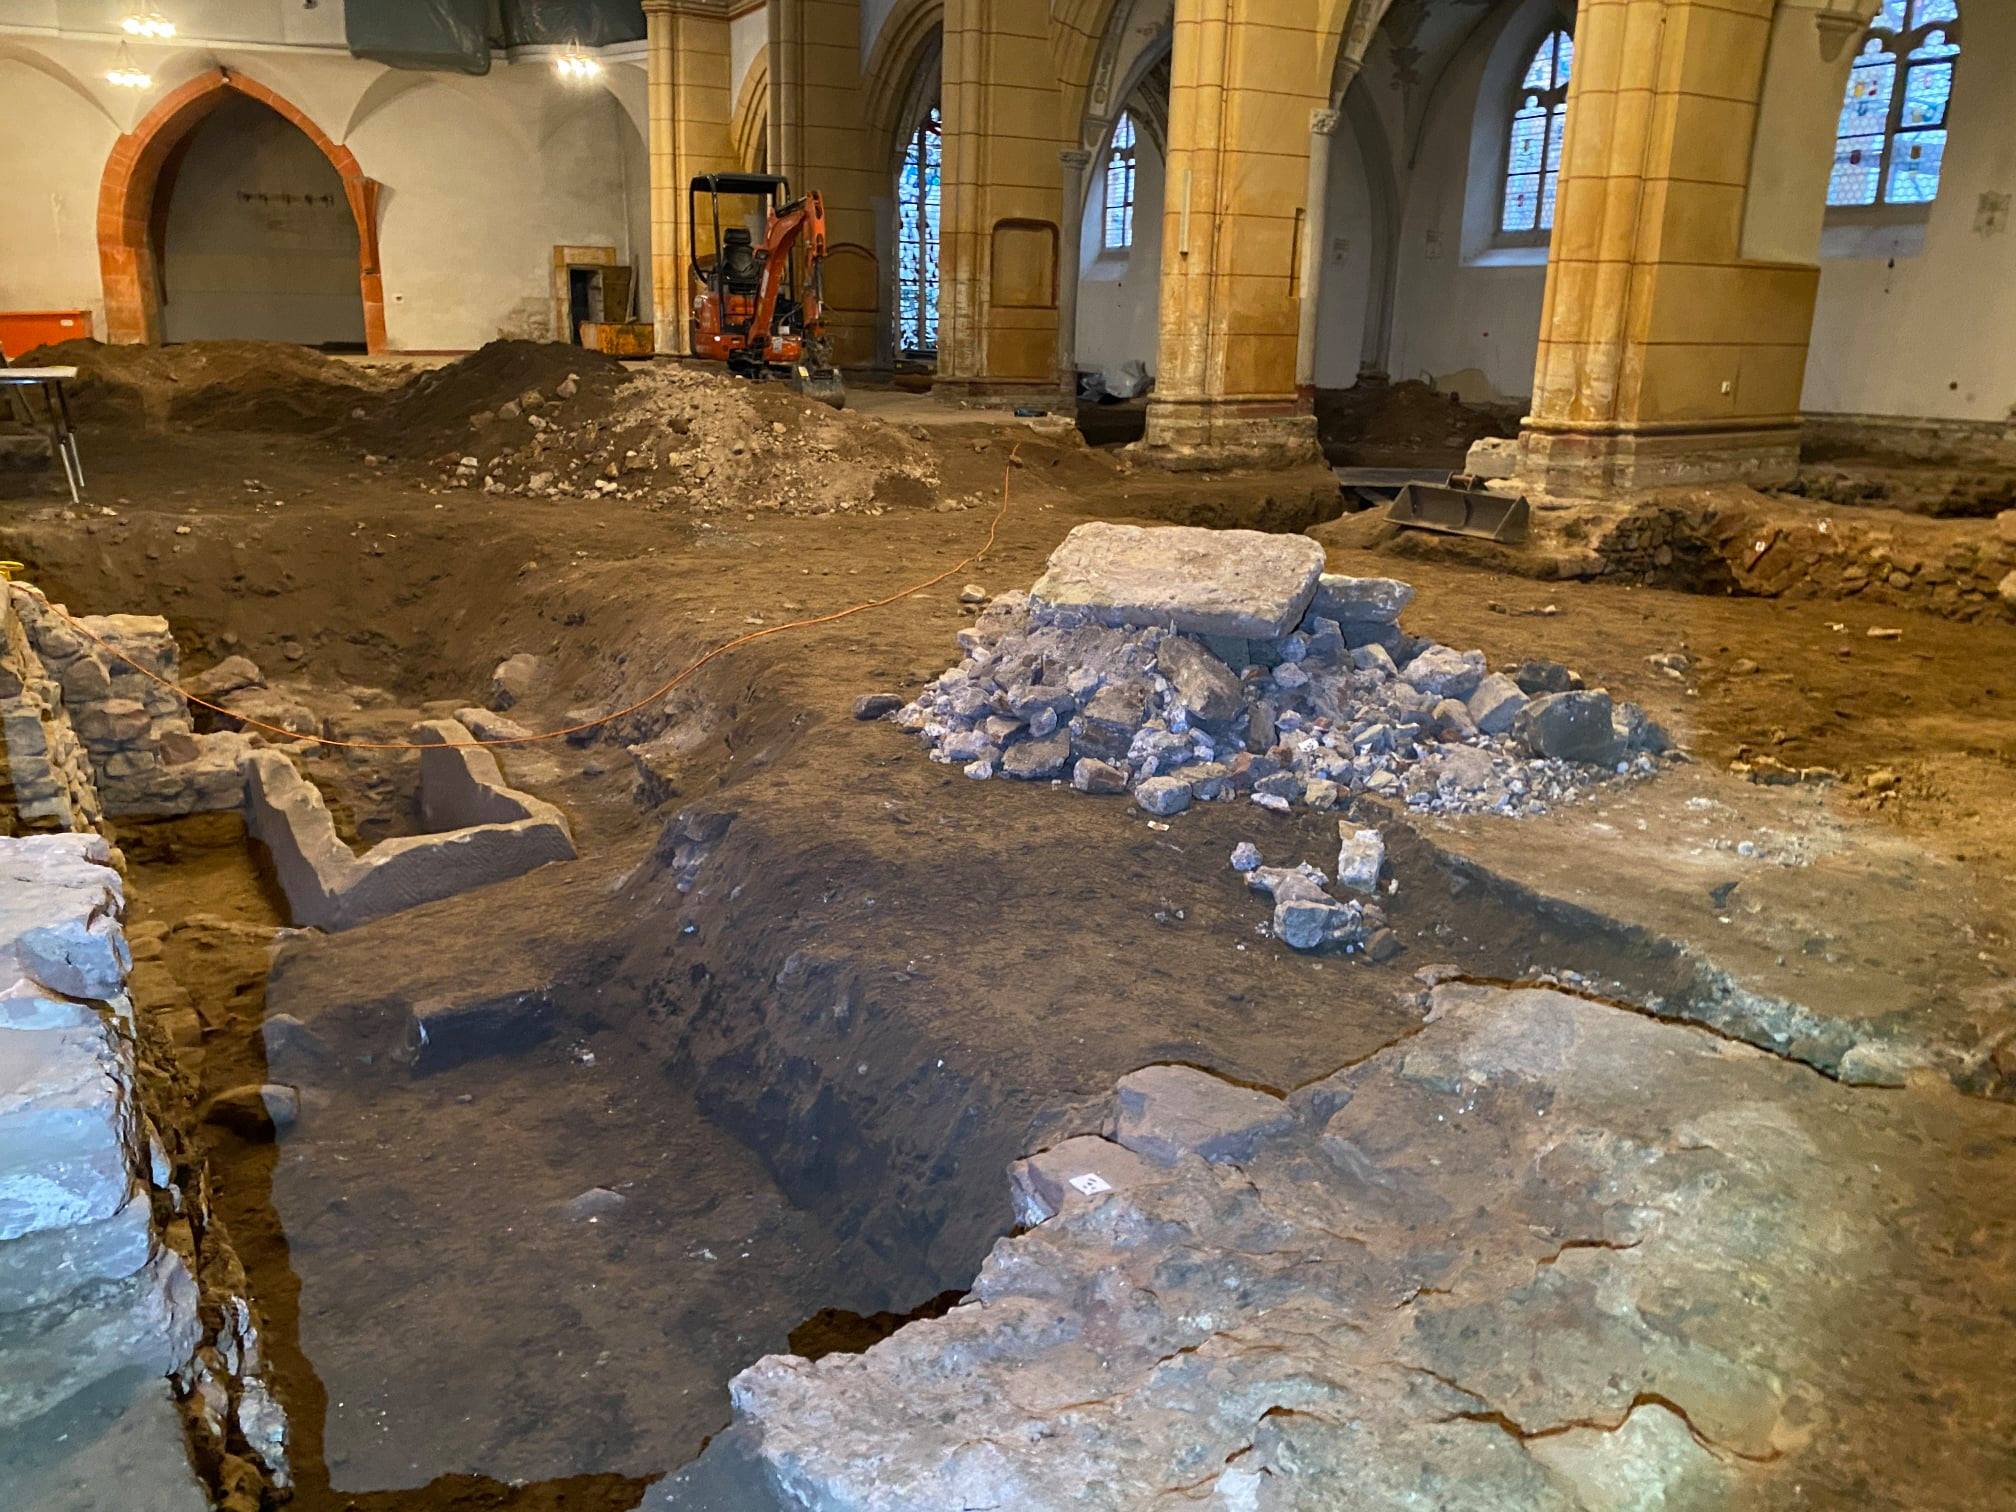 Zerstörter Fußbodenbelag in der Kirche St. Gangolf in Trier.